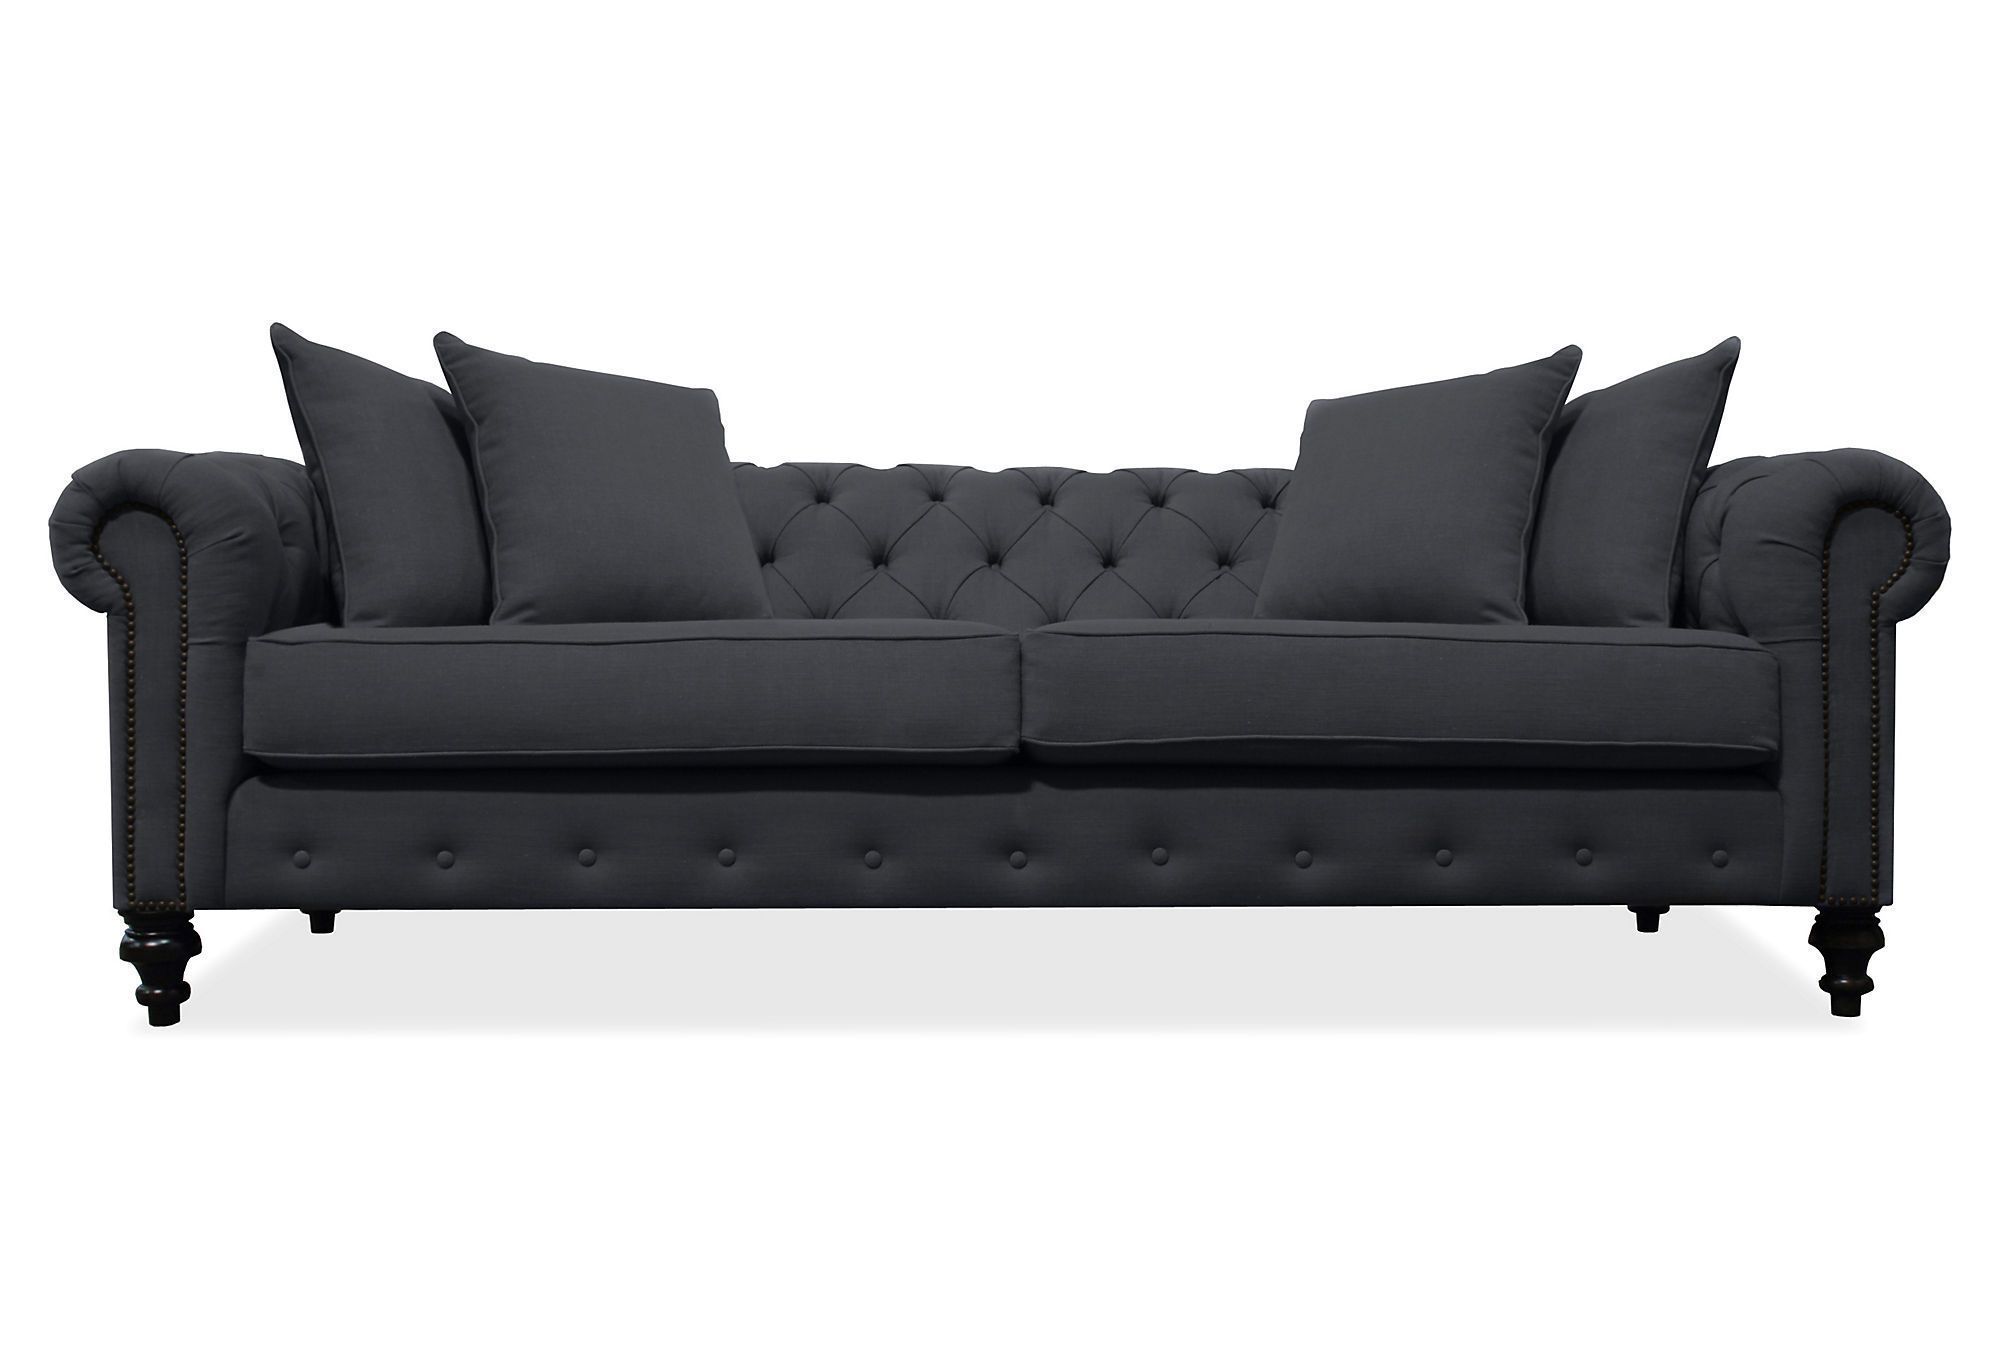 Saretta Tufted Linen Sofa, Charcoal | Linen Sofa, Sofa, Family Living Rooms Inside Light Charcoal Linen Sofas (View 13 of 20)